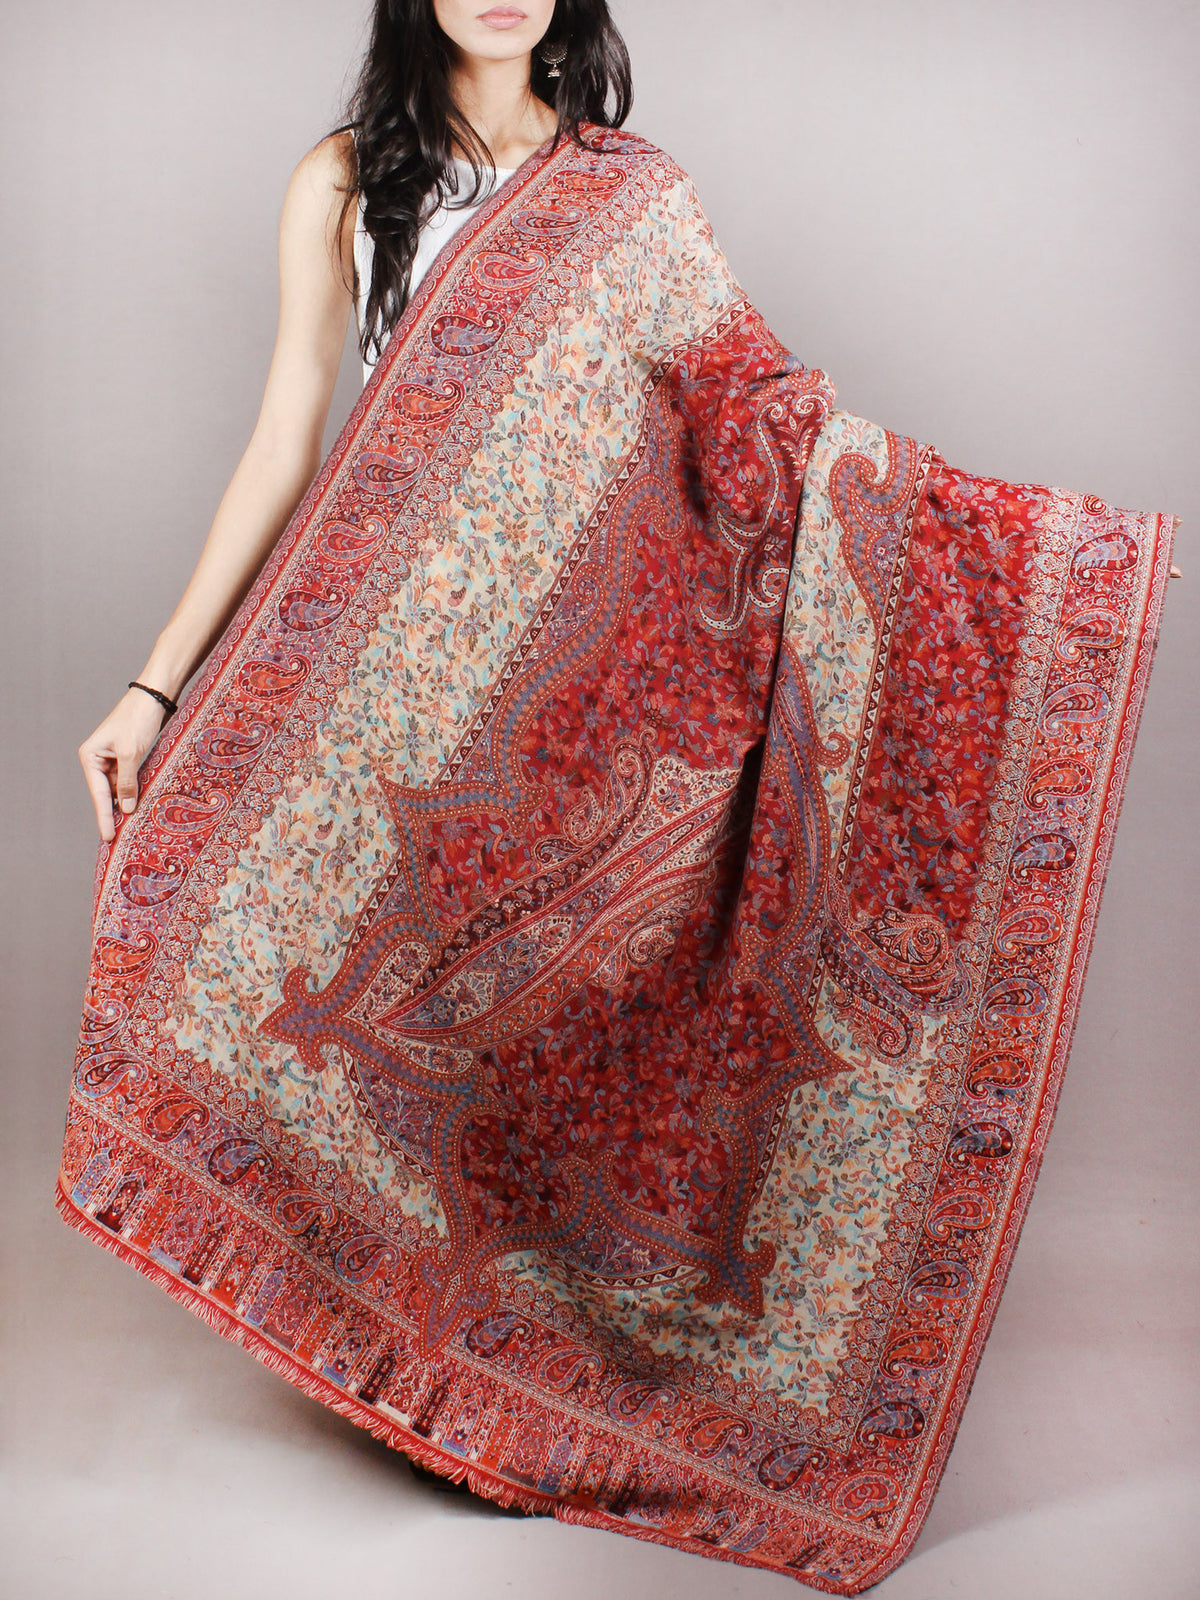 Beige Maroon Red Pure Wool Kani Jamawar Cashmere Shawl From Kashmir - S200104